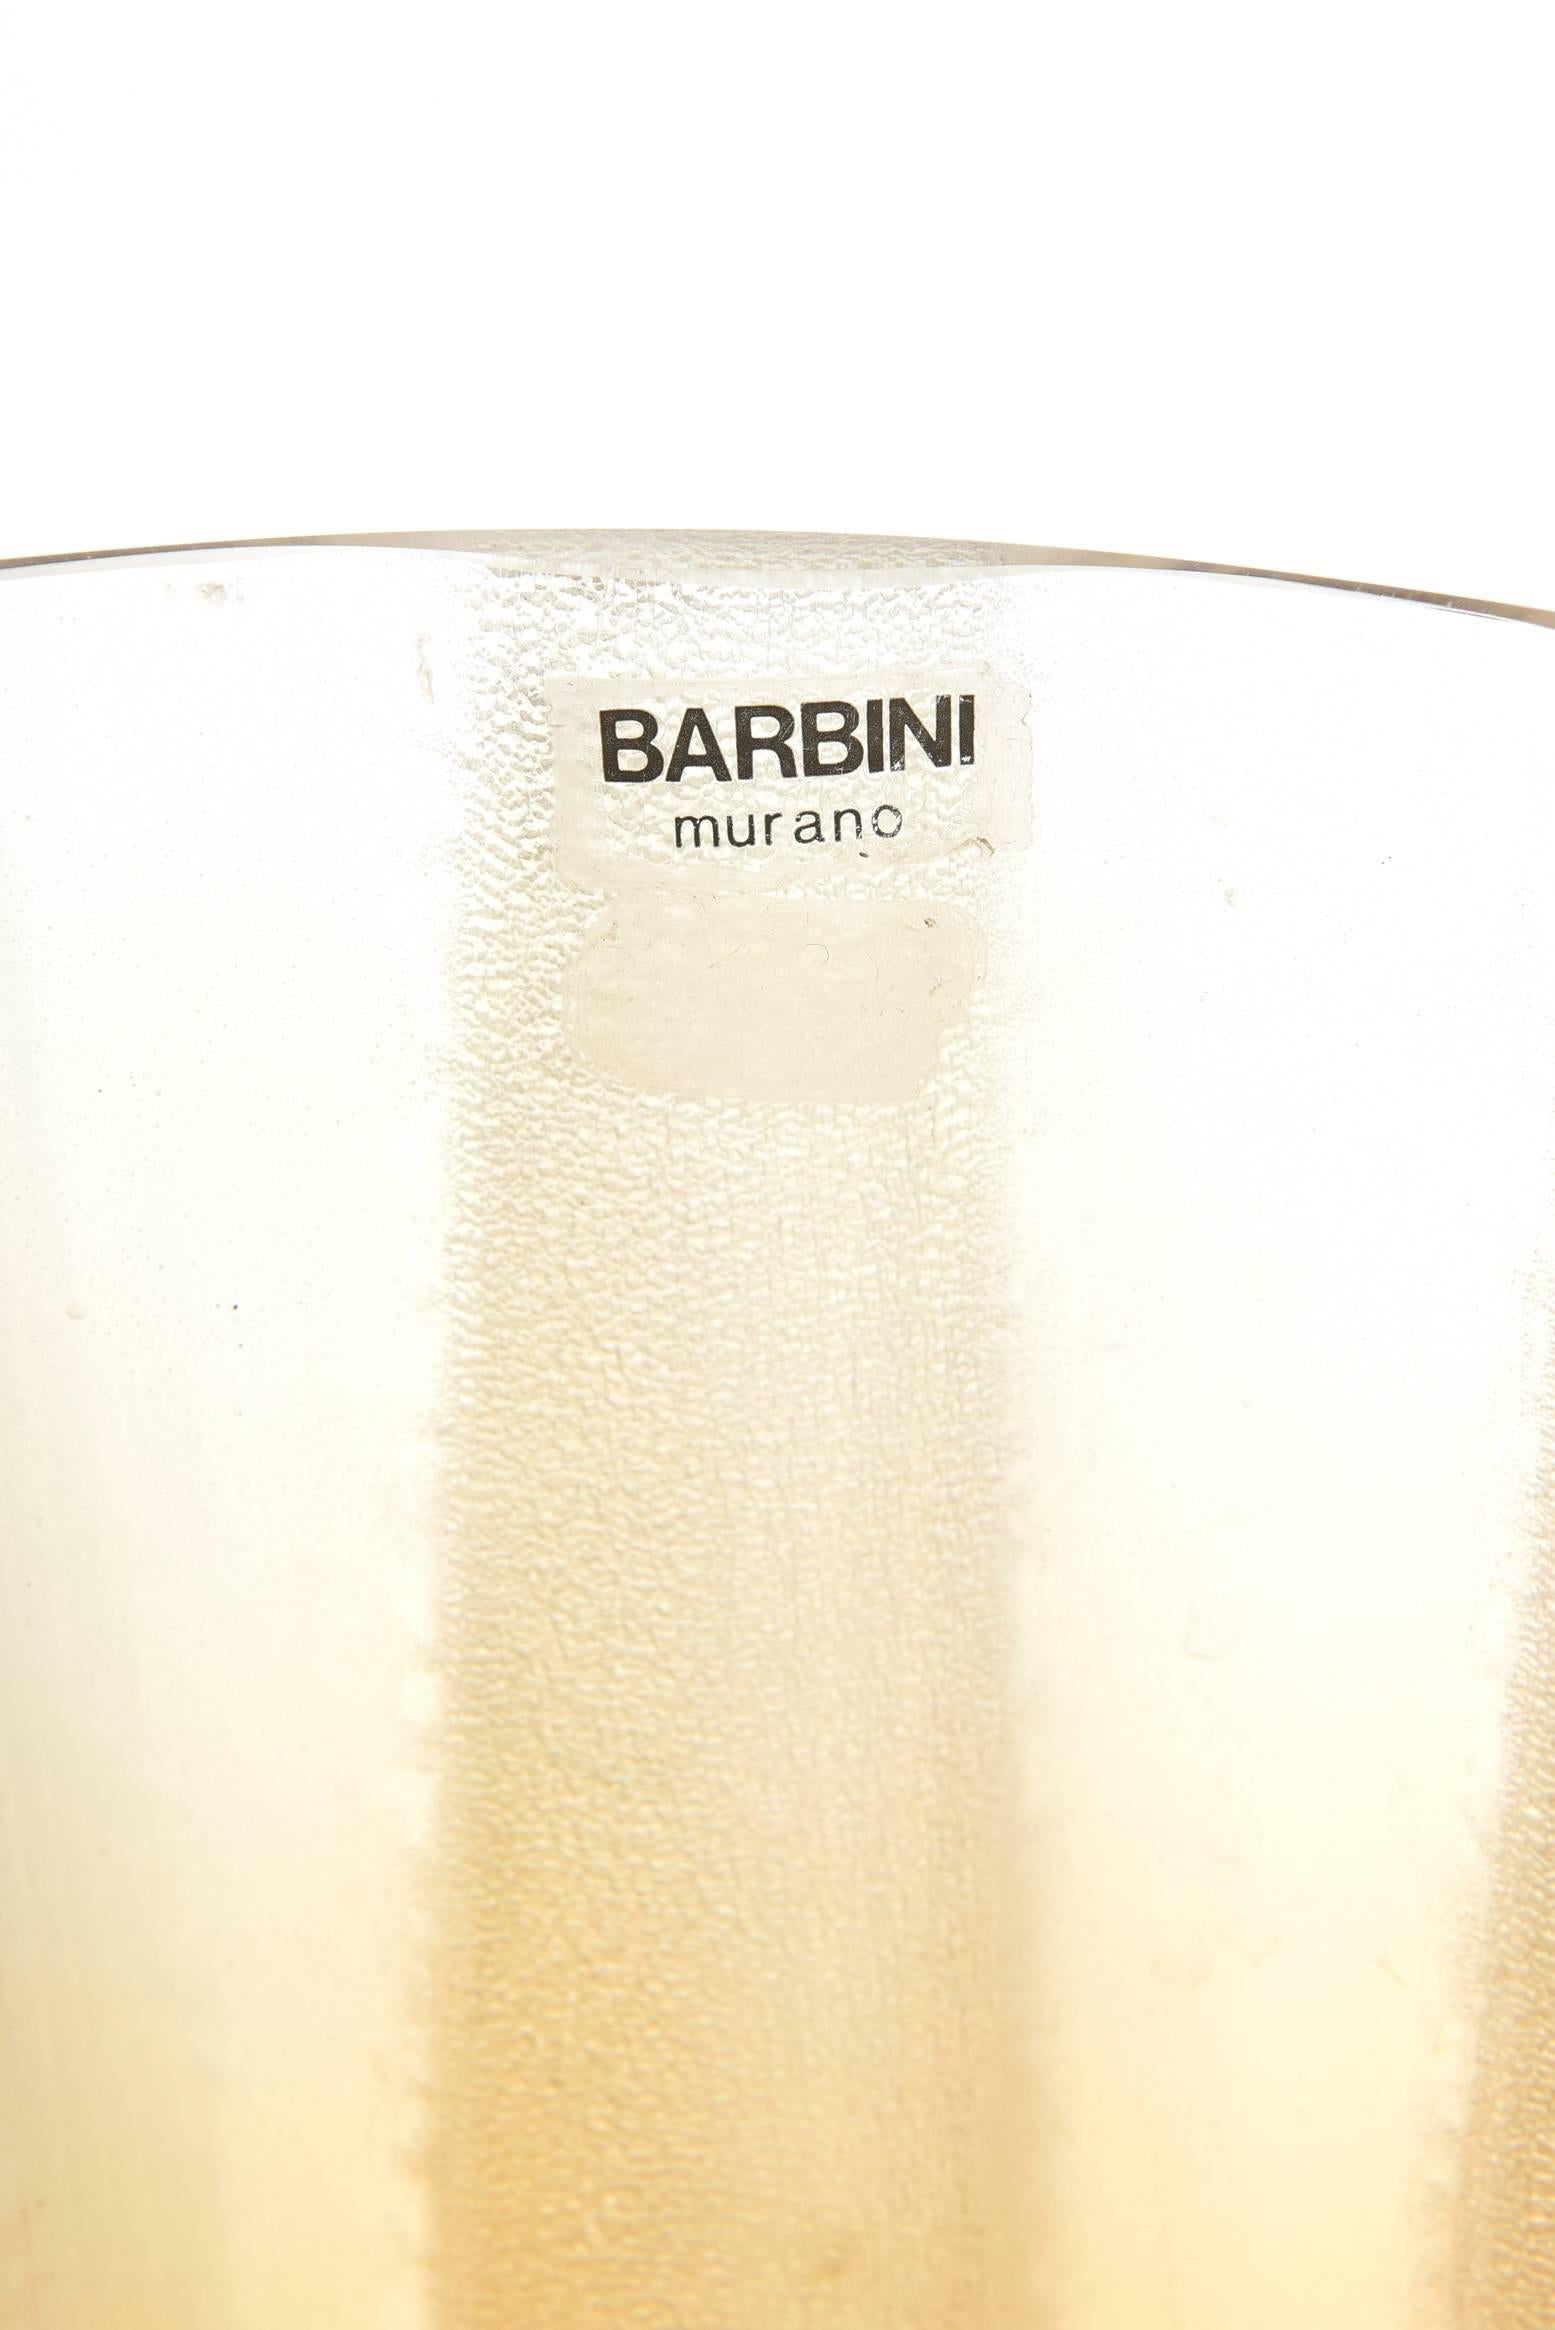 Late 20th Century Italian Murano Barbini Acid Etched Monumental Glass Vase